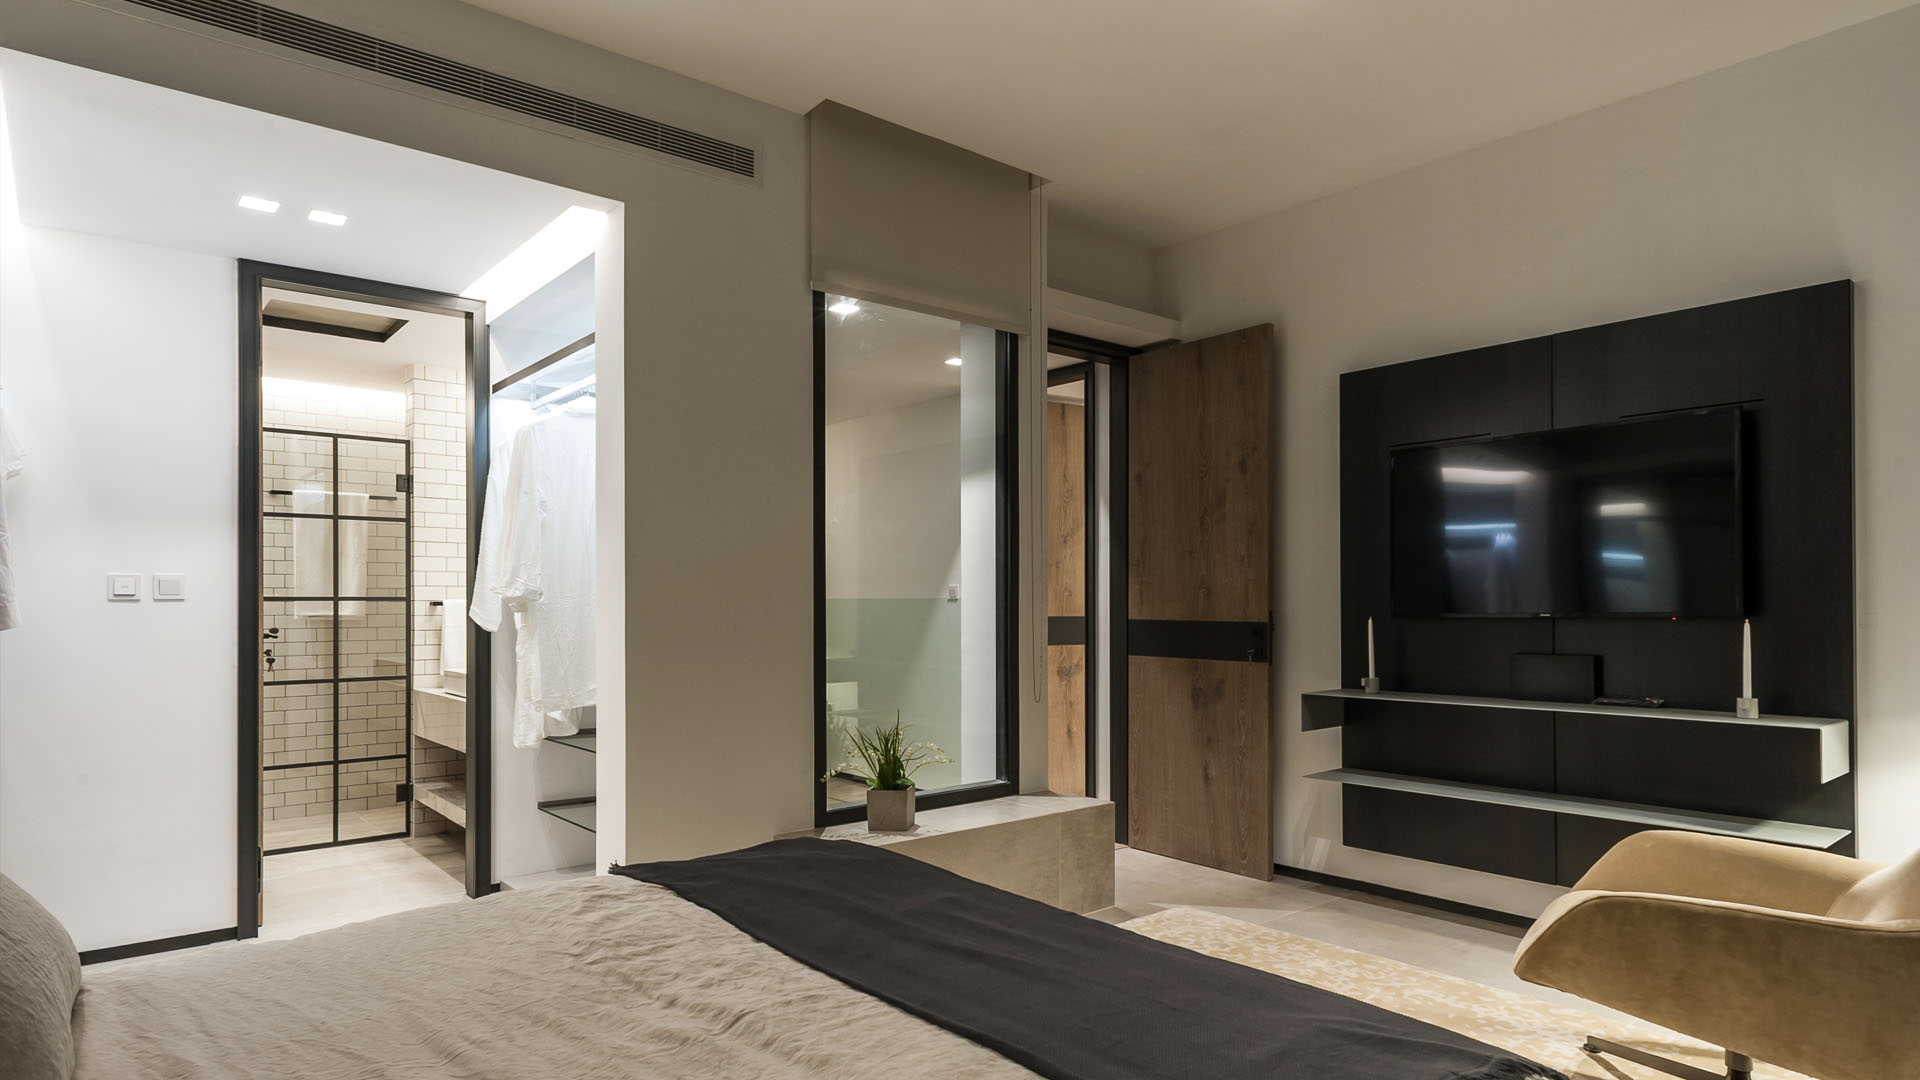 The Terraces ‘Modern Minimalistic’ Duplex Bedroom